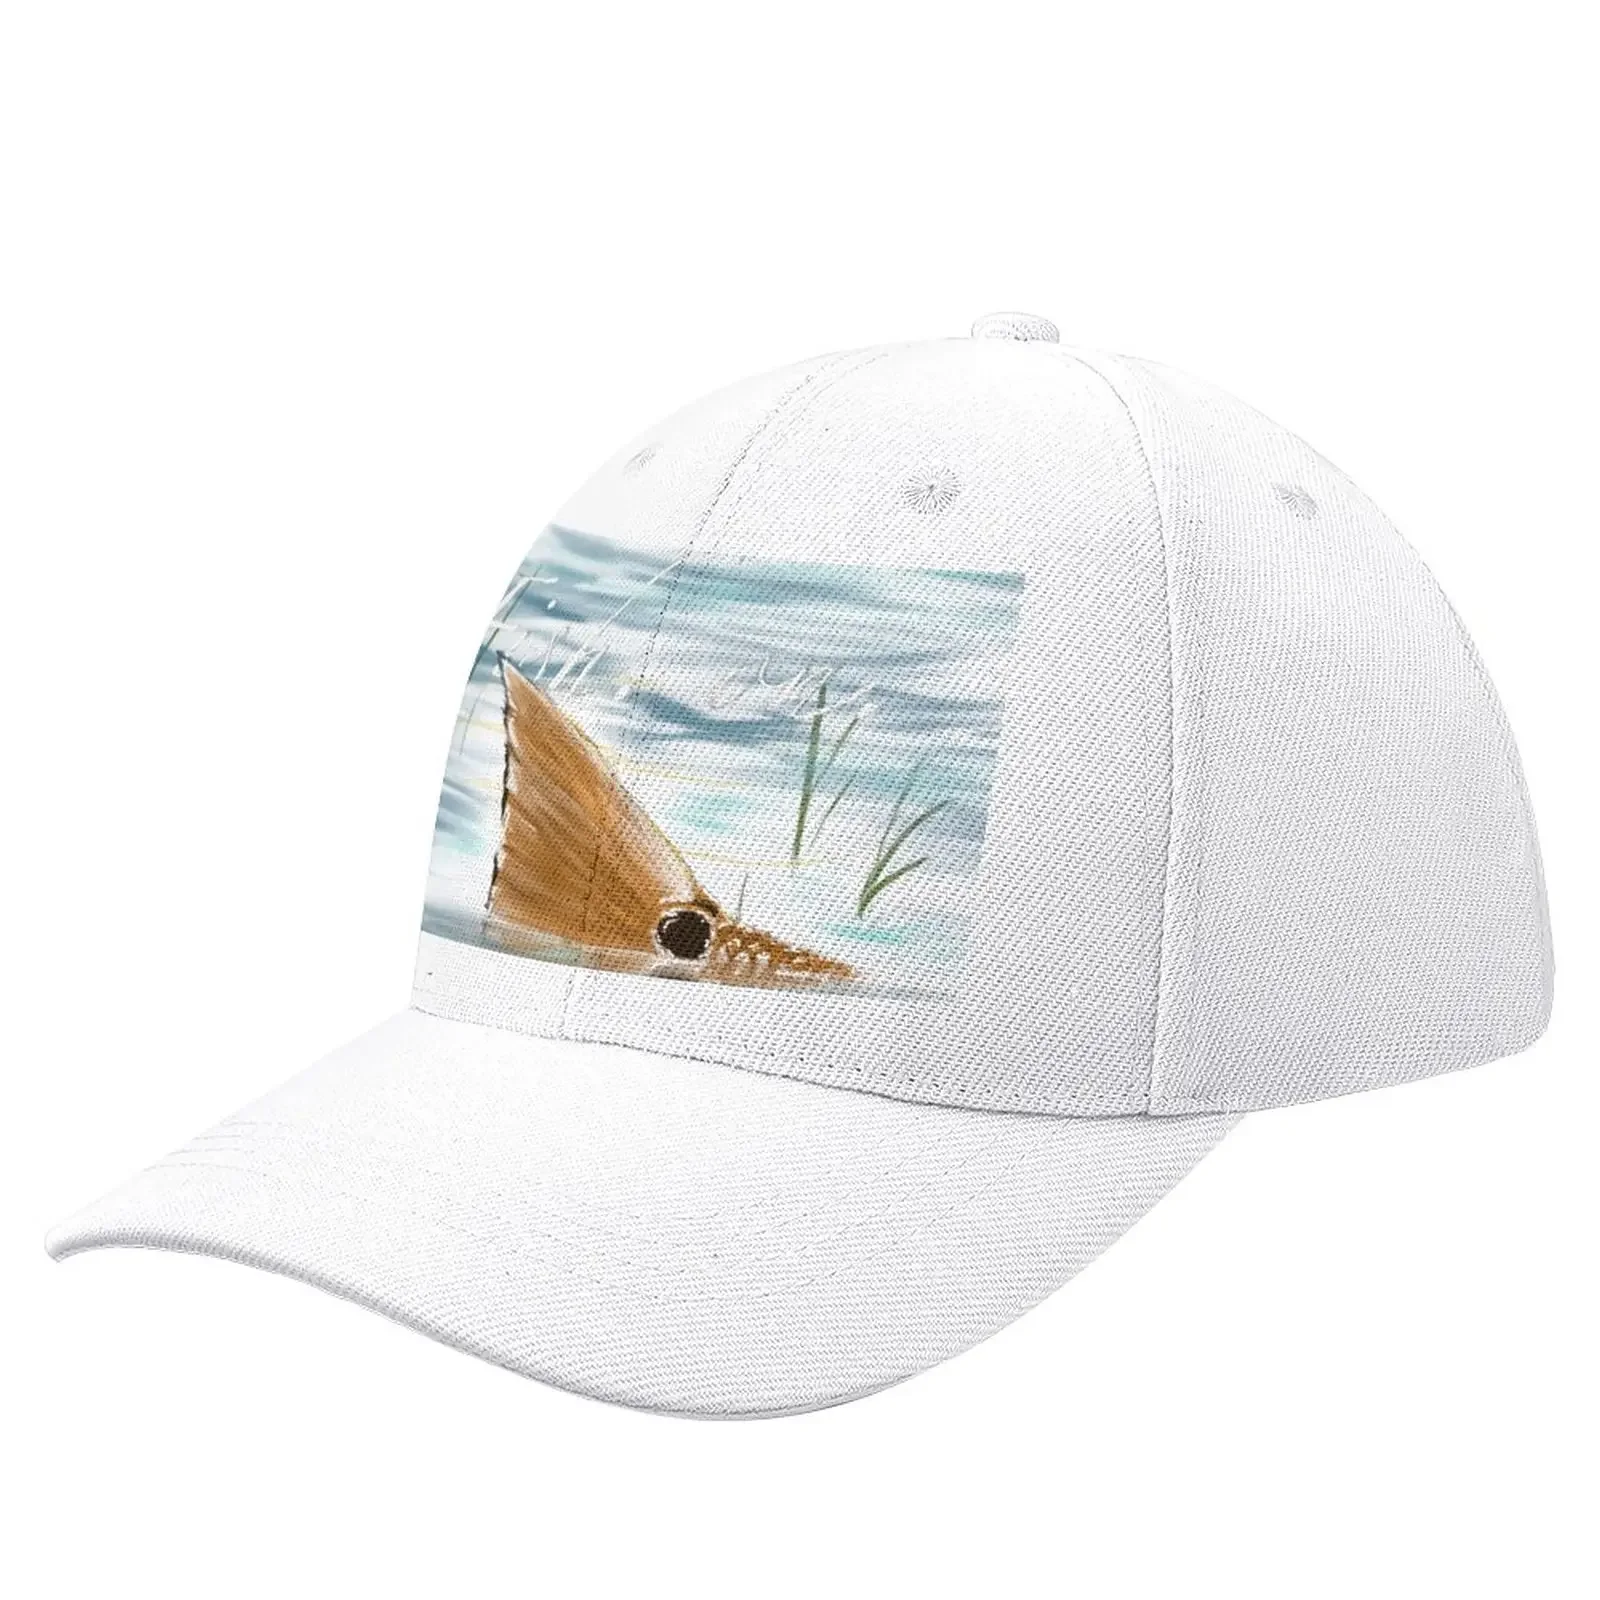 

Redfish in blue water Baseball Cap Ball Cap sun hat Trucker Hats Thermal Visor Caps For Women Men'S